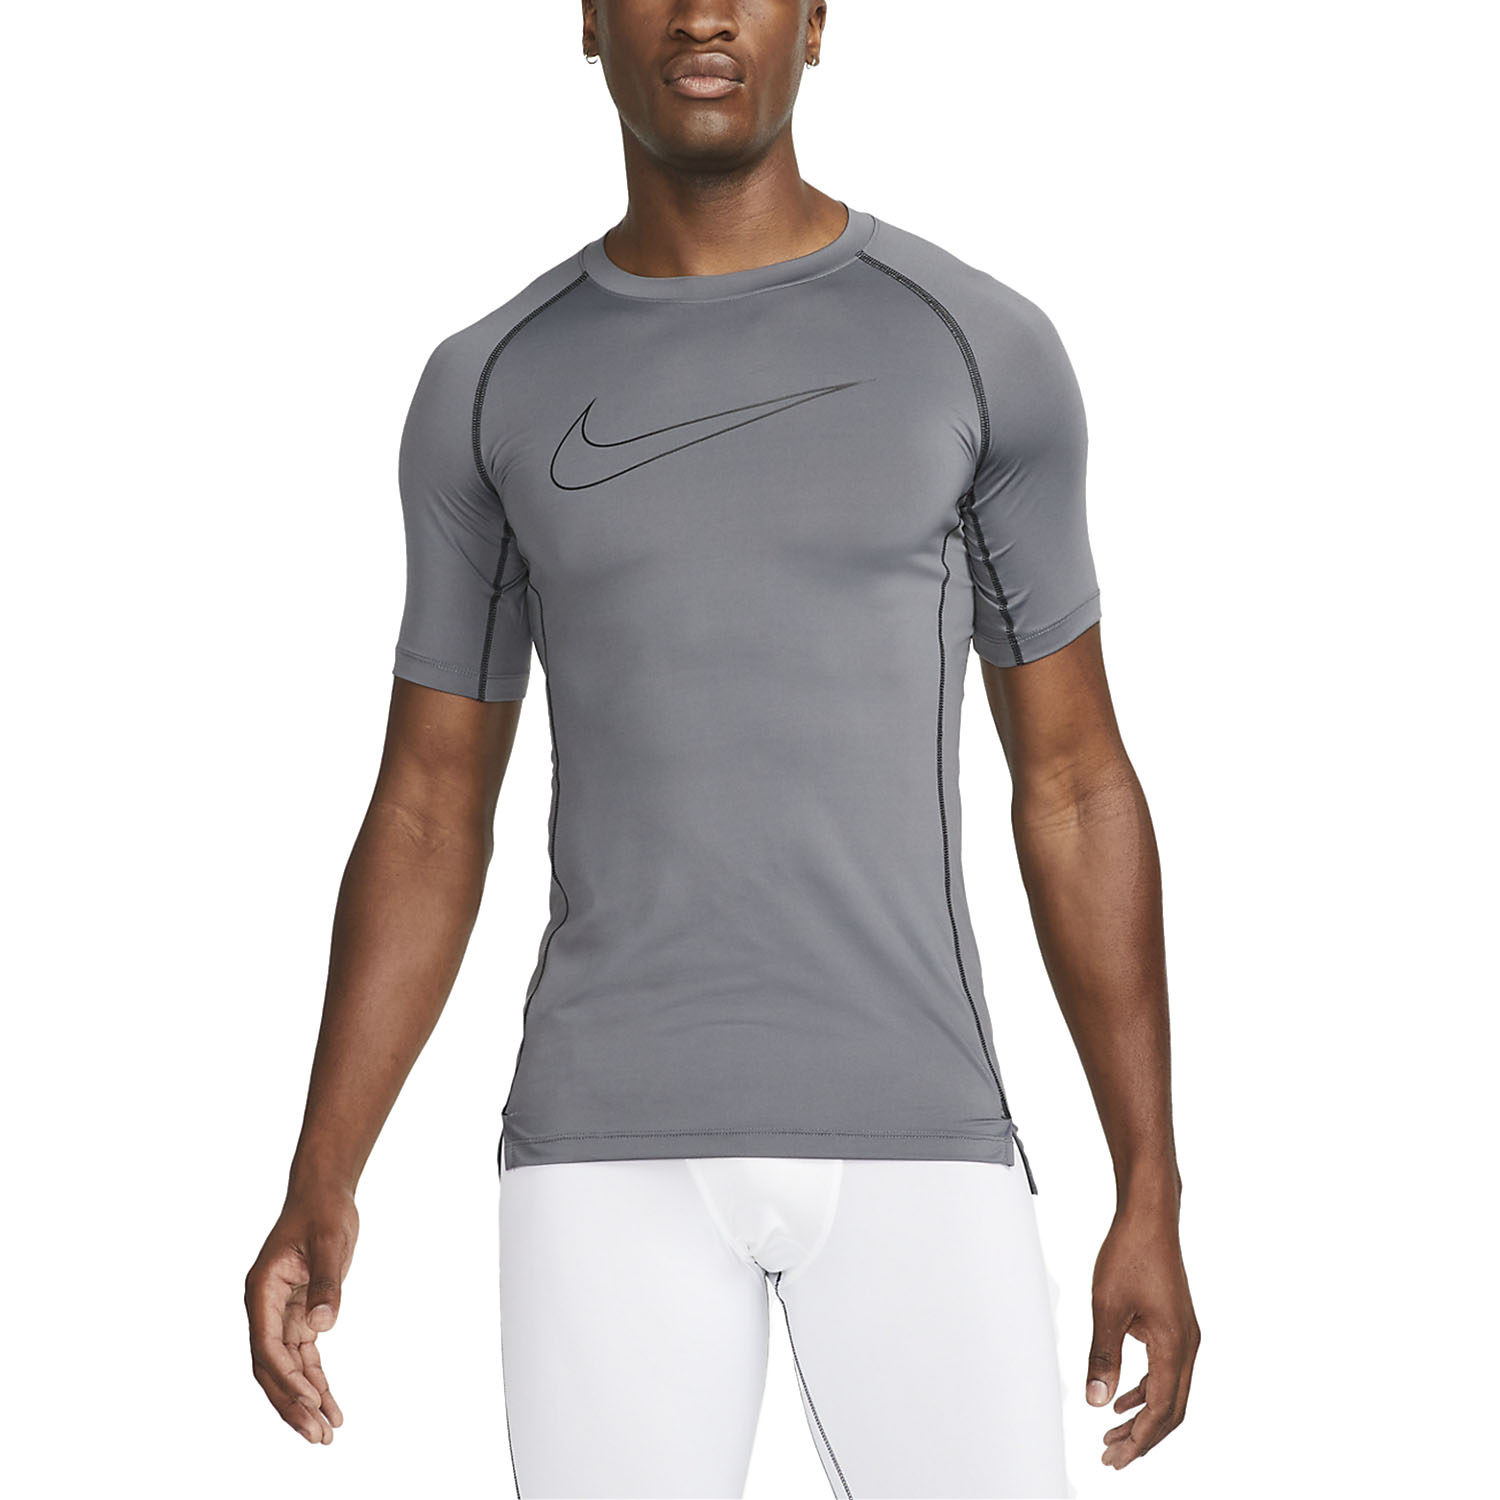 Meyella Accesible Auto Nike Pro Logo Camiseta de Tenis Hombre - Iron Grey/Black